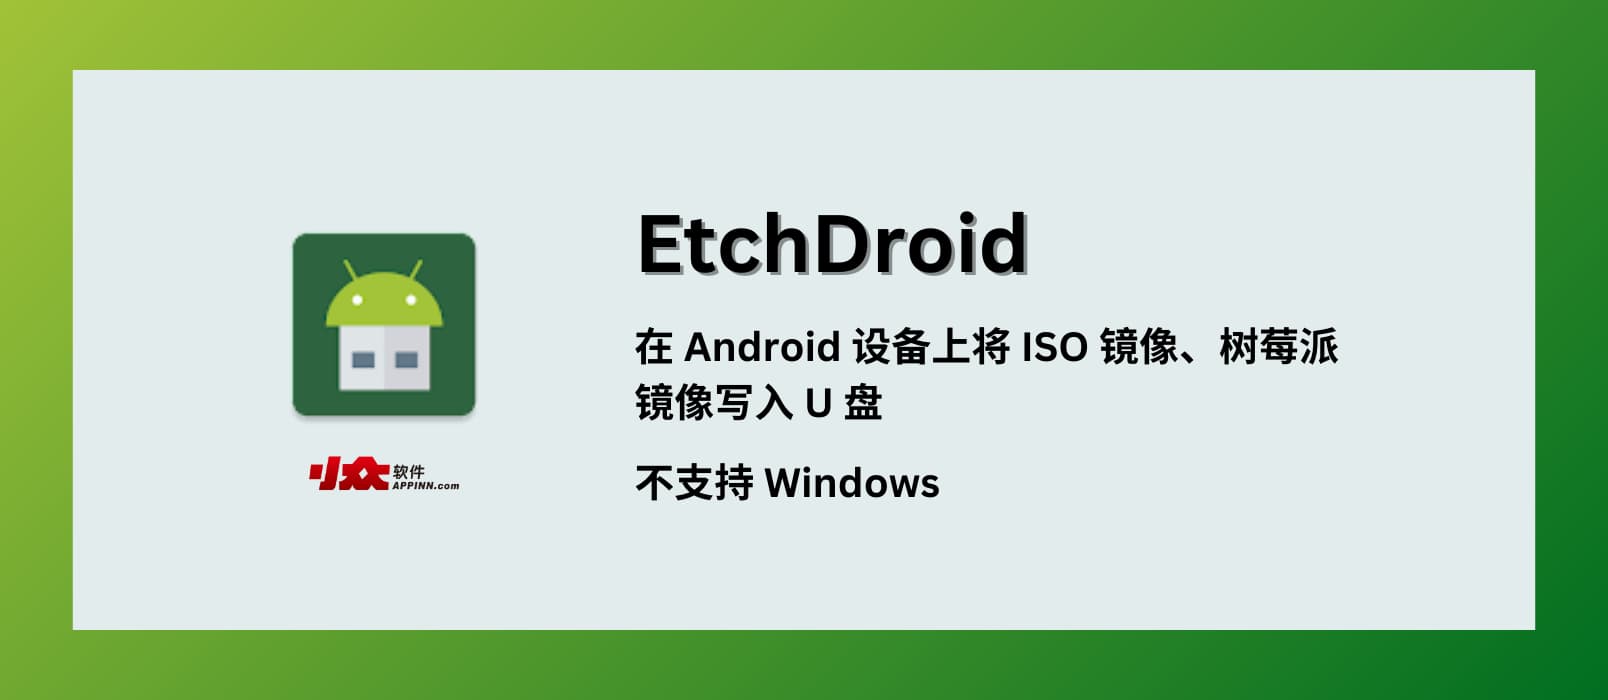 EtchDroid – 在 Android 设备上将 ISO 和 DMG 镜像、树莓派镜像写入 U 盘